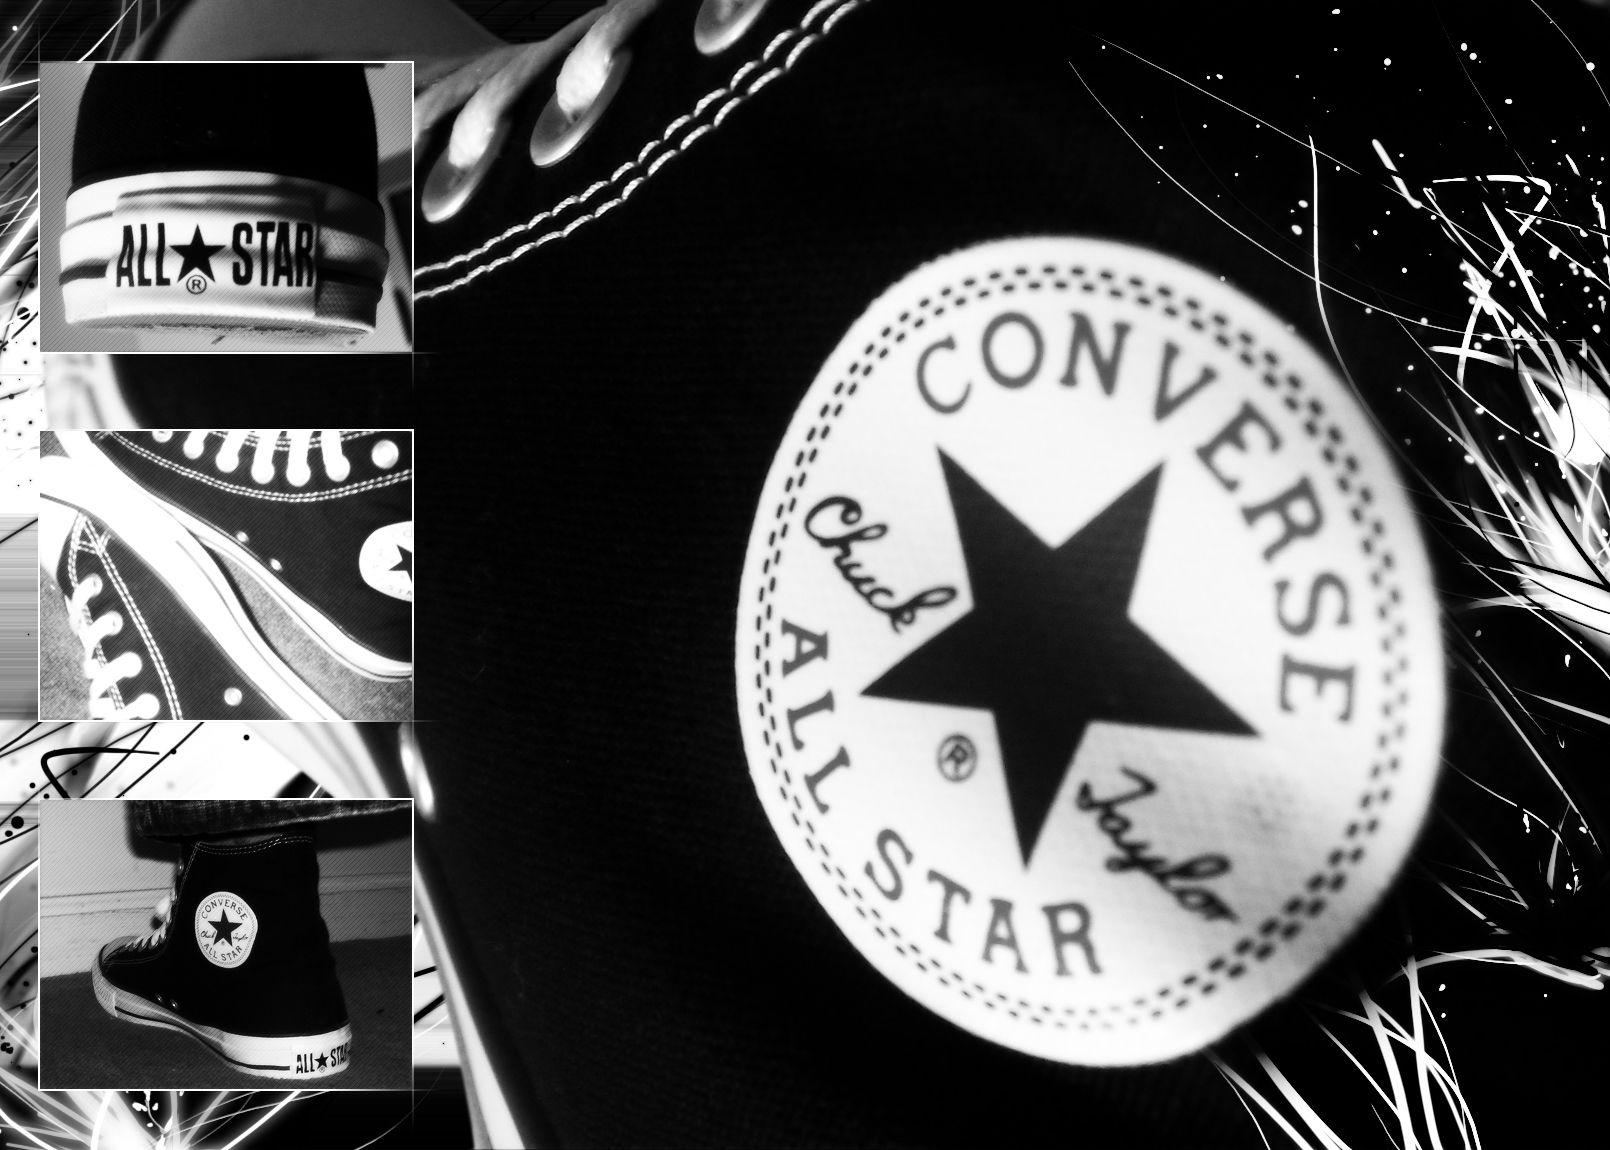 Converse All Star Logos Cool Wallpaper. I HD Image